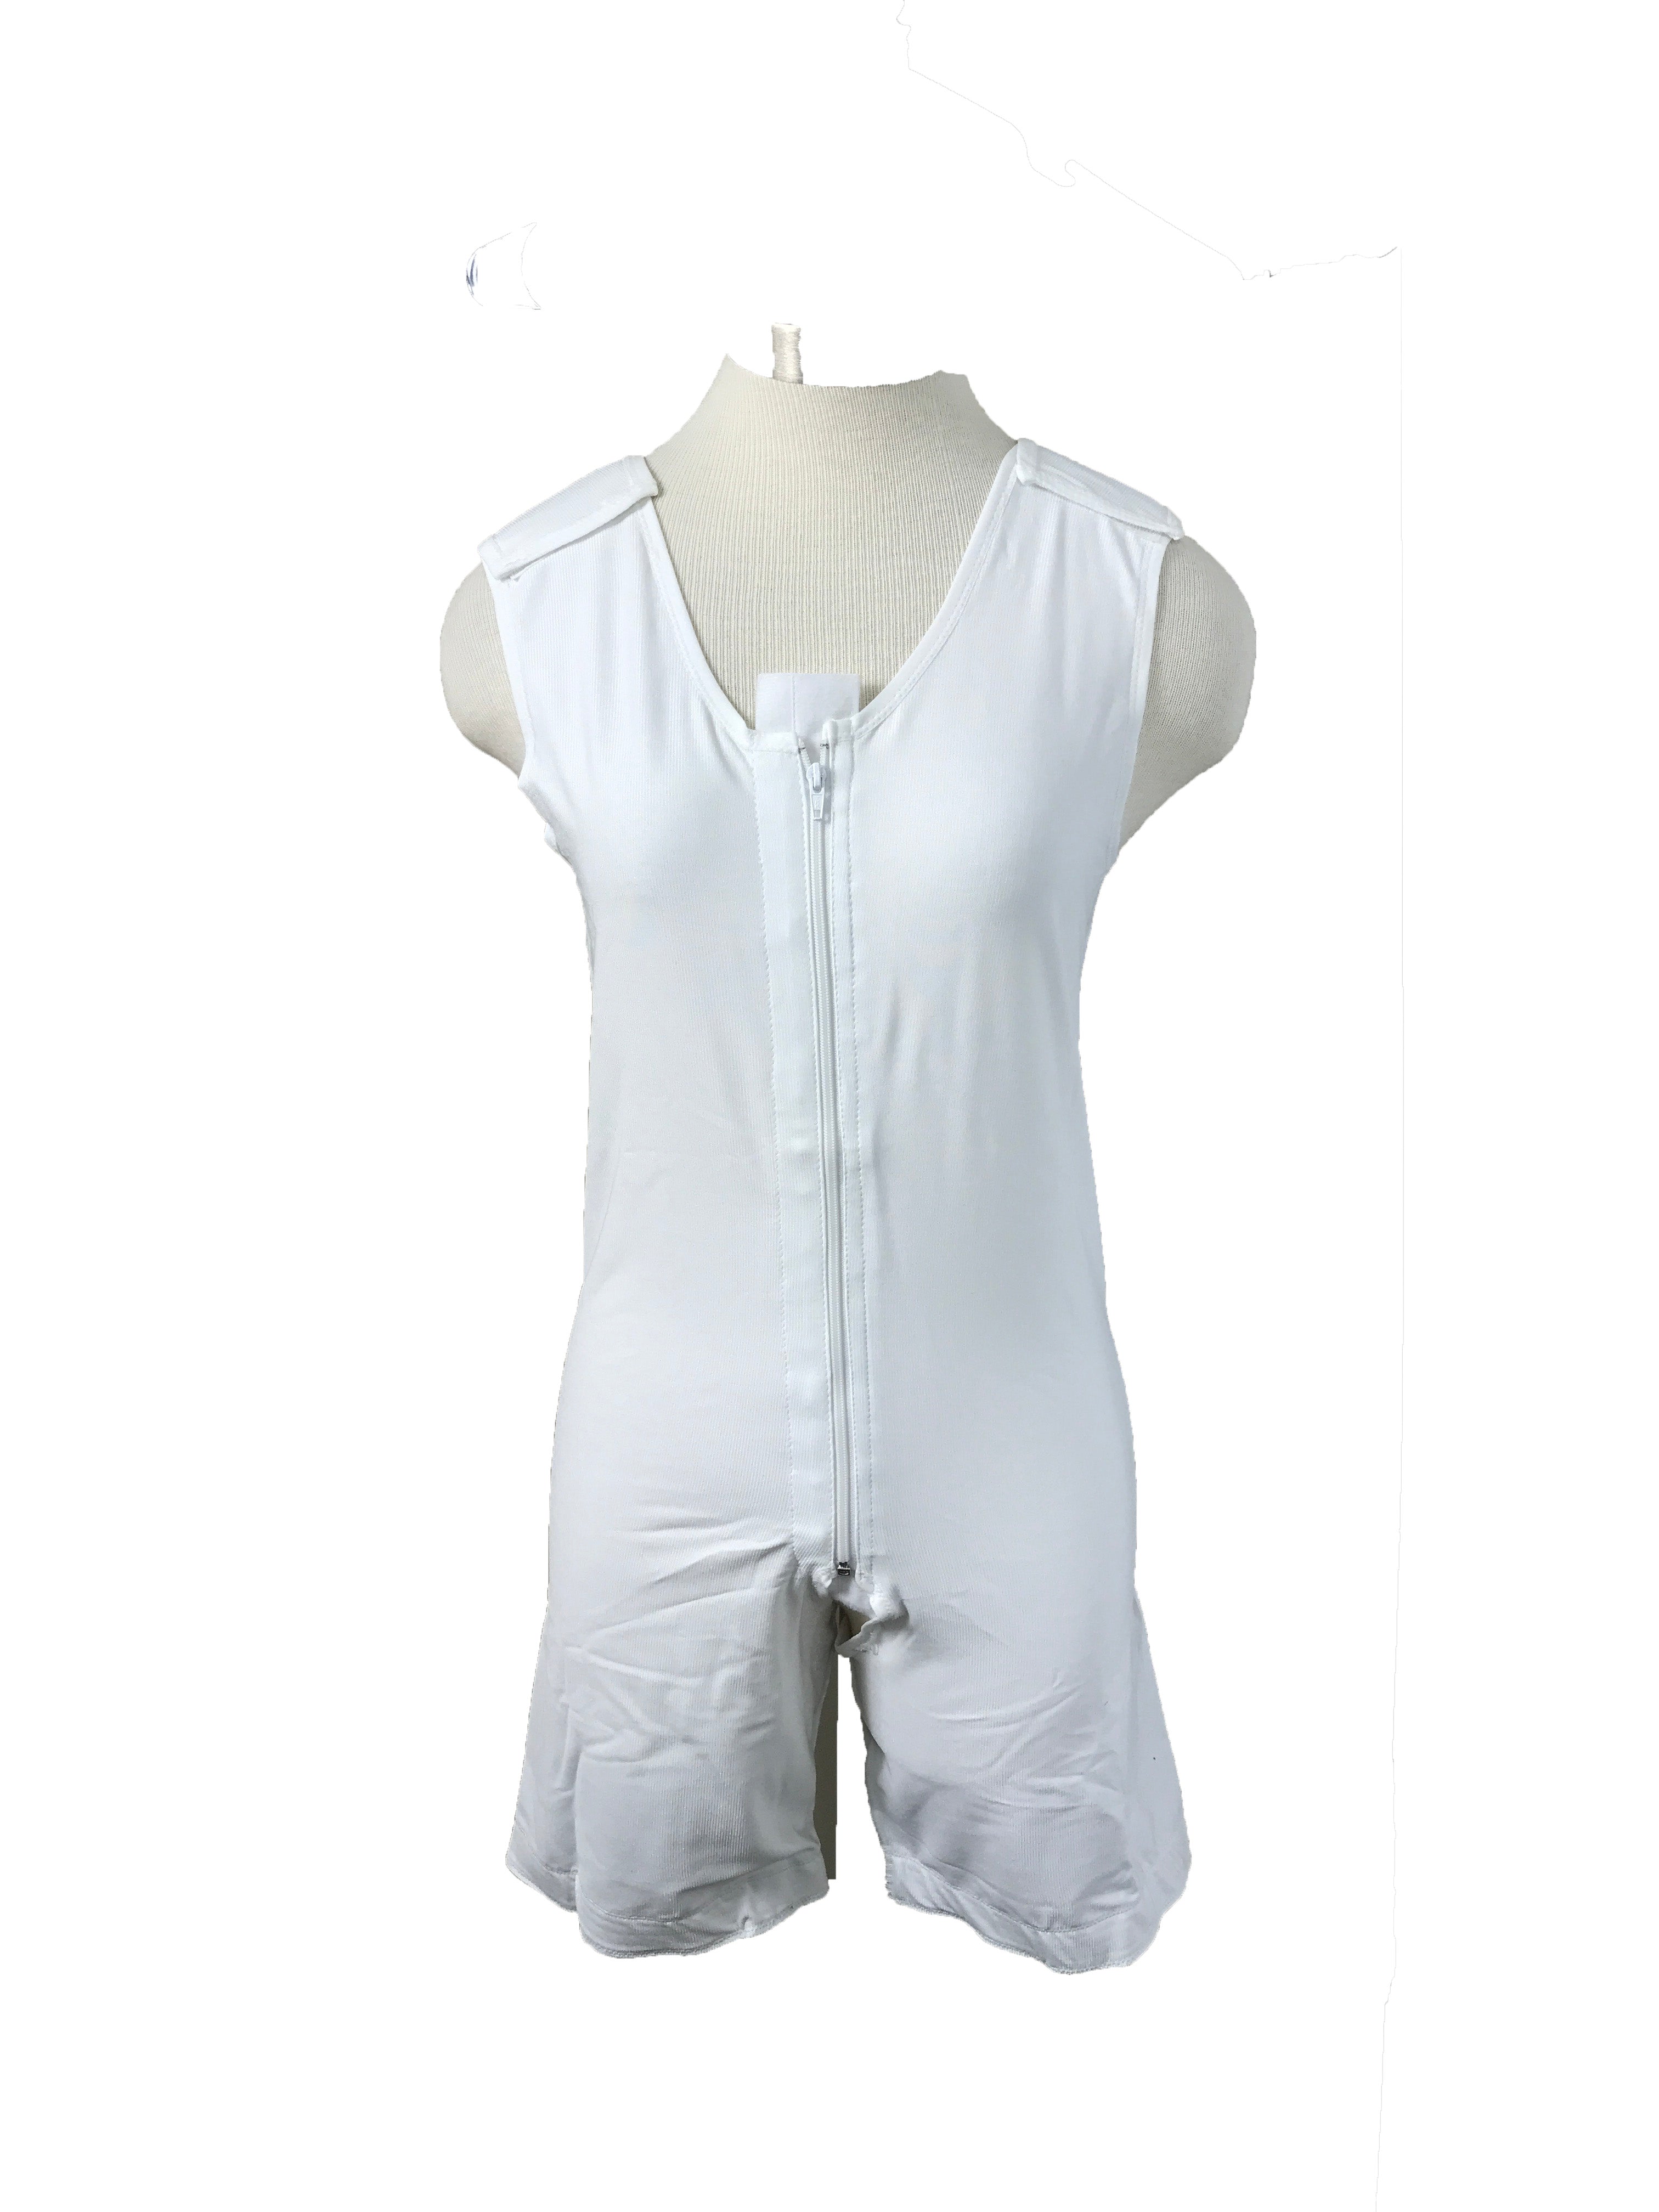 Marena ComfortWear Compression and Support Garment White Bodysuit Men's Size L